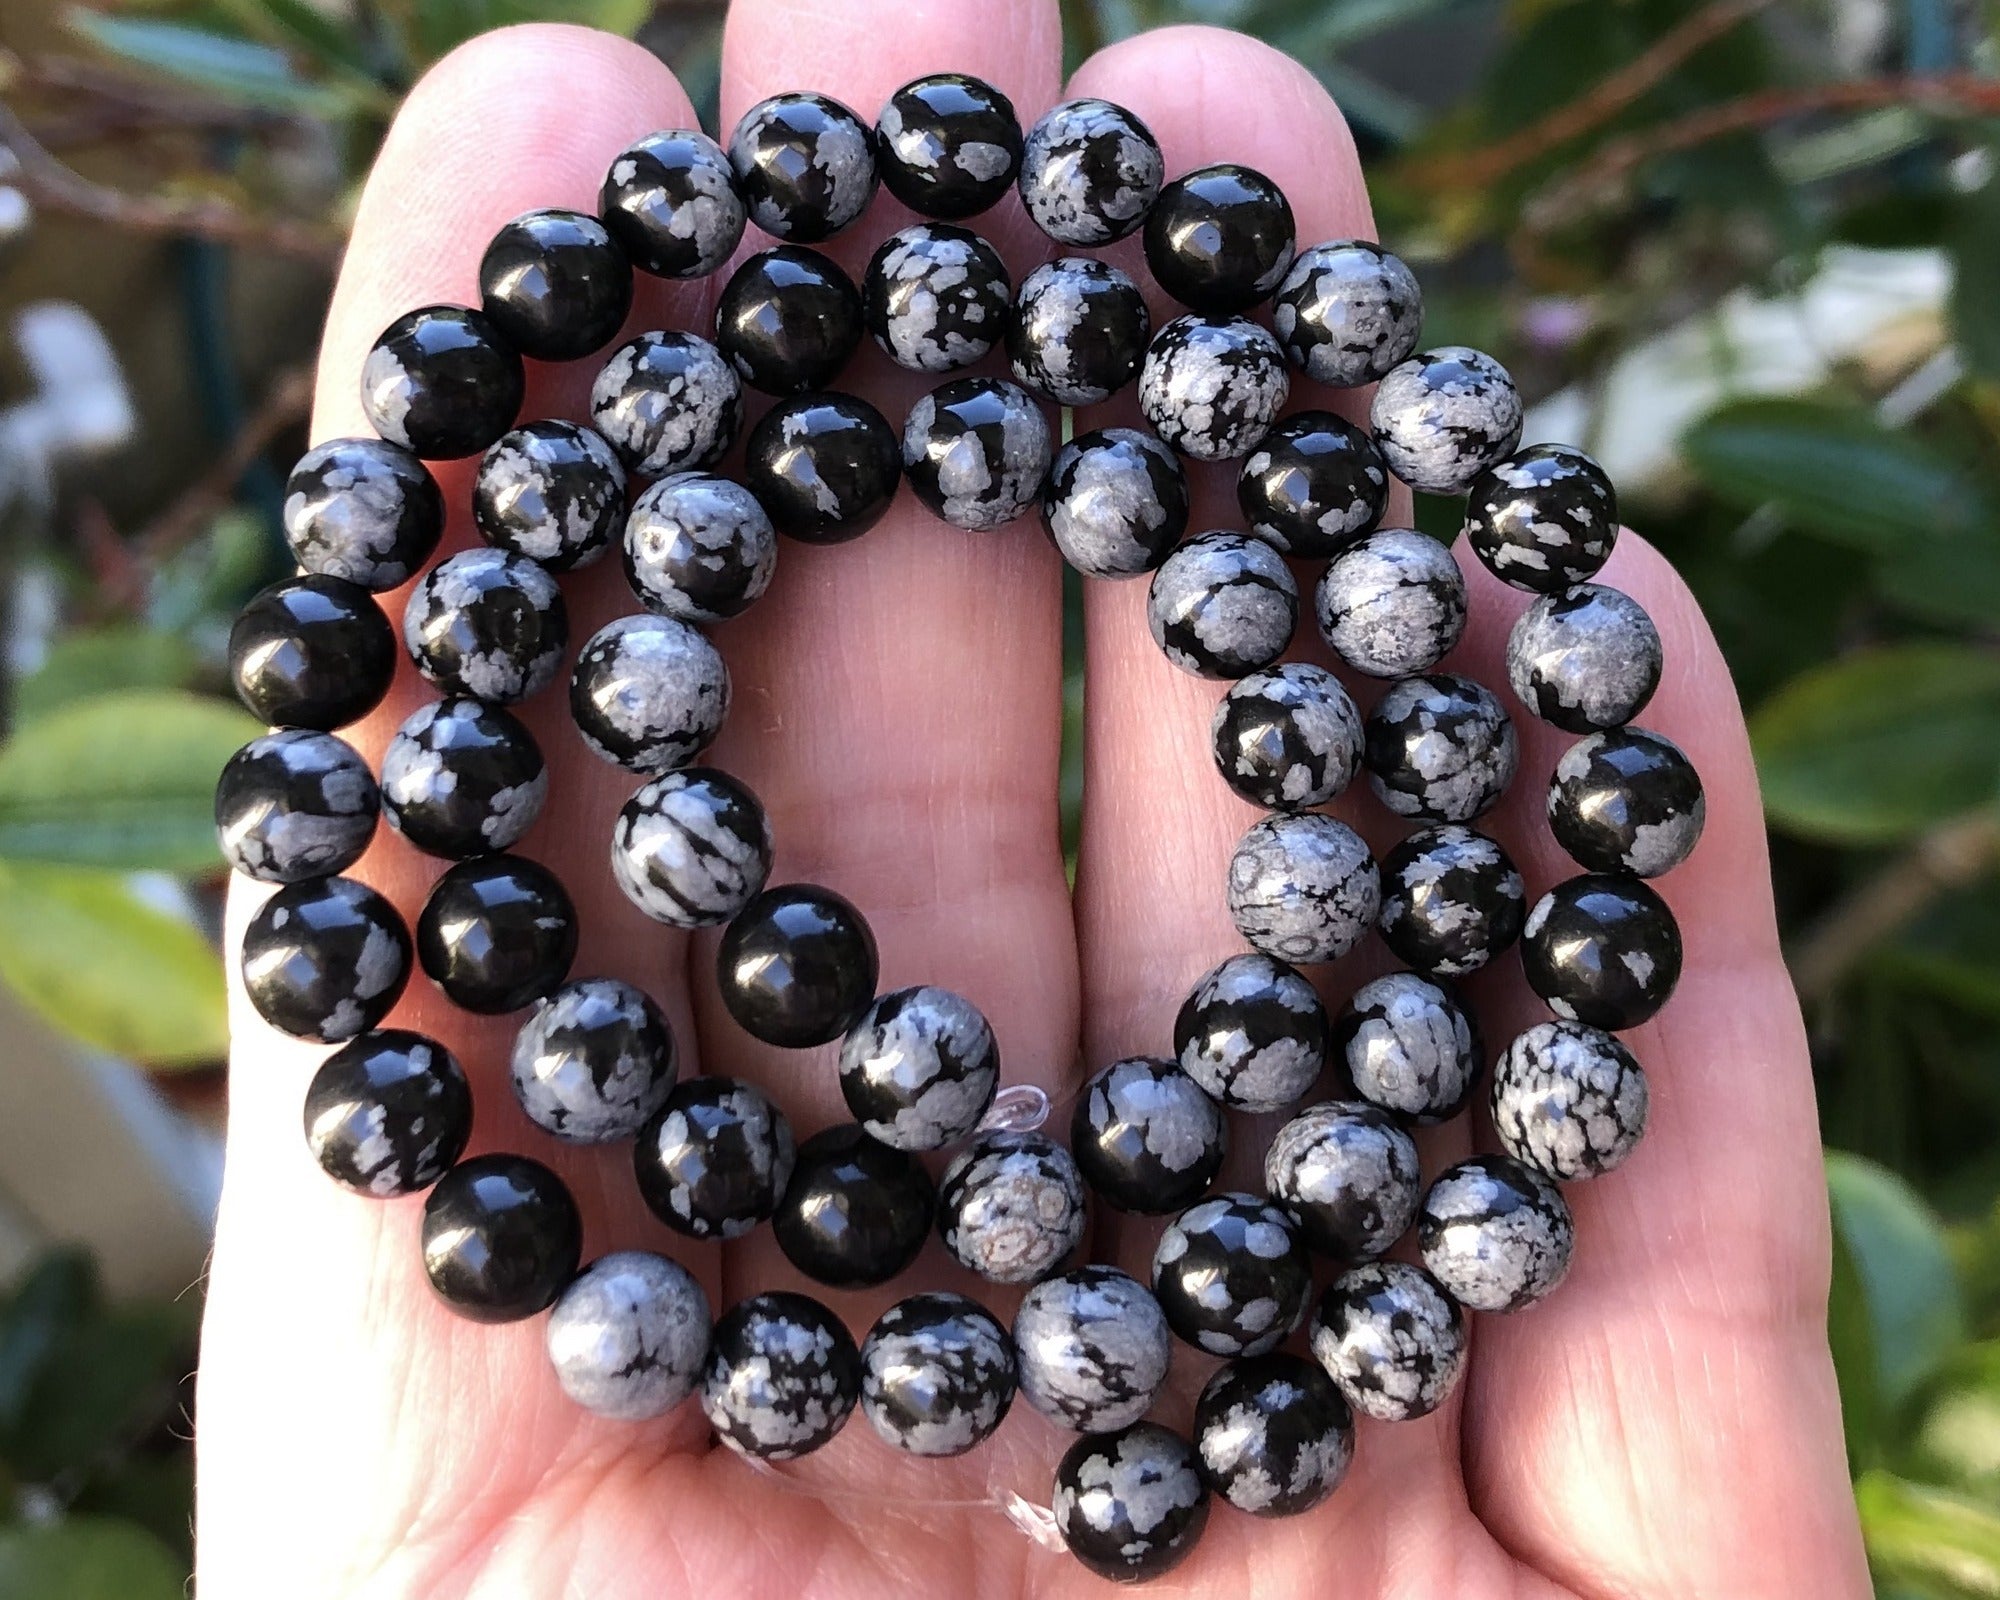 Snowflake Obsidian polished 6mm round gemstone beads 15" strand - Oz Beads 